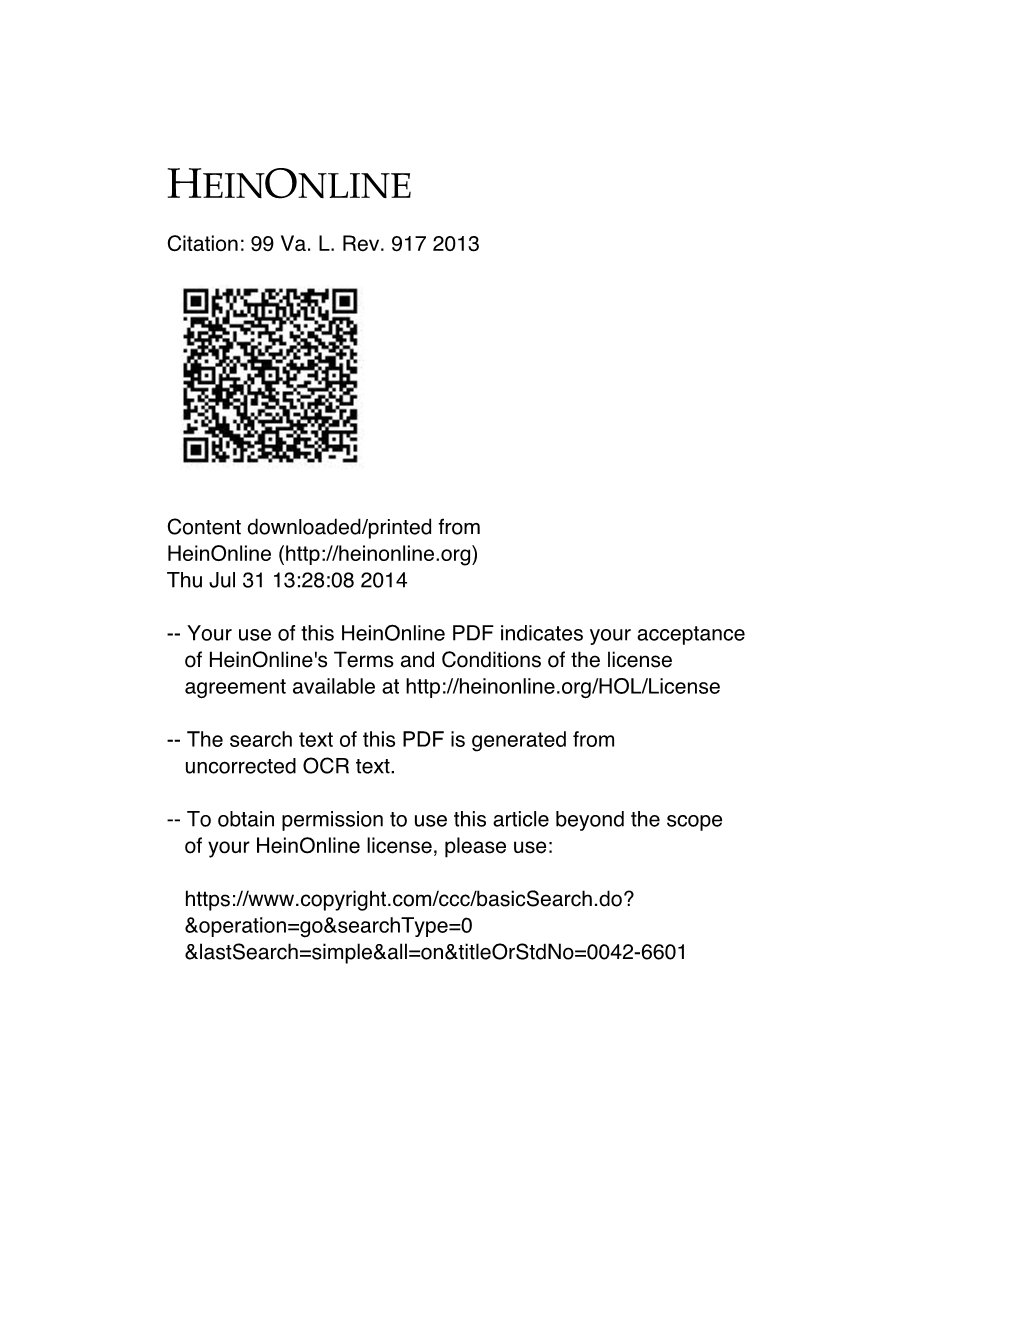 Heinonline (PDF)